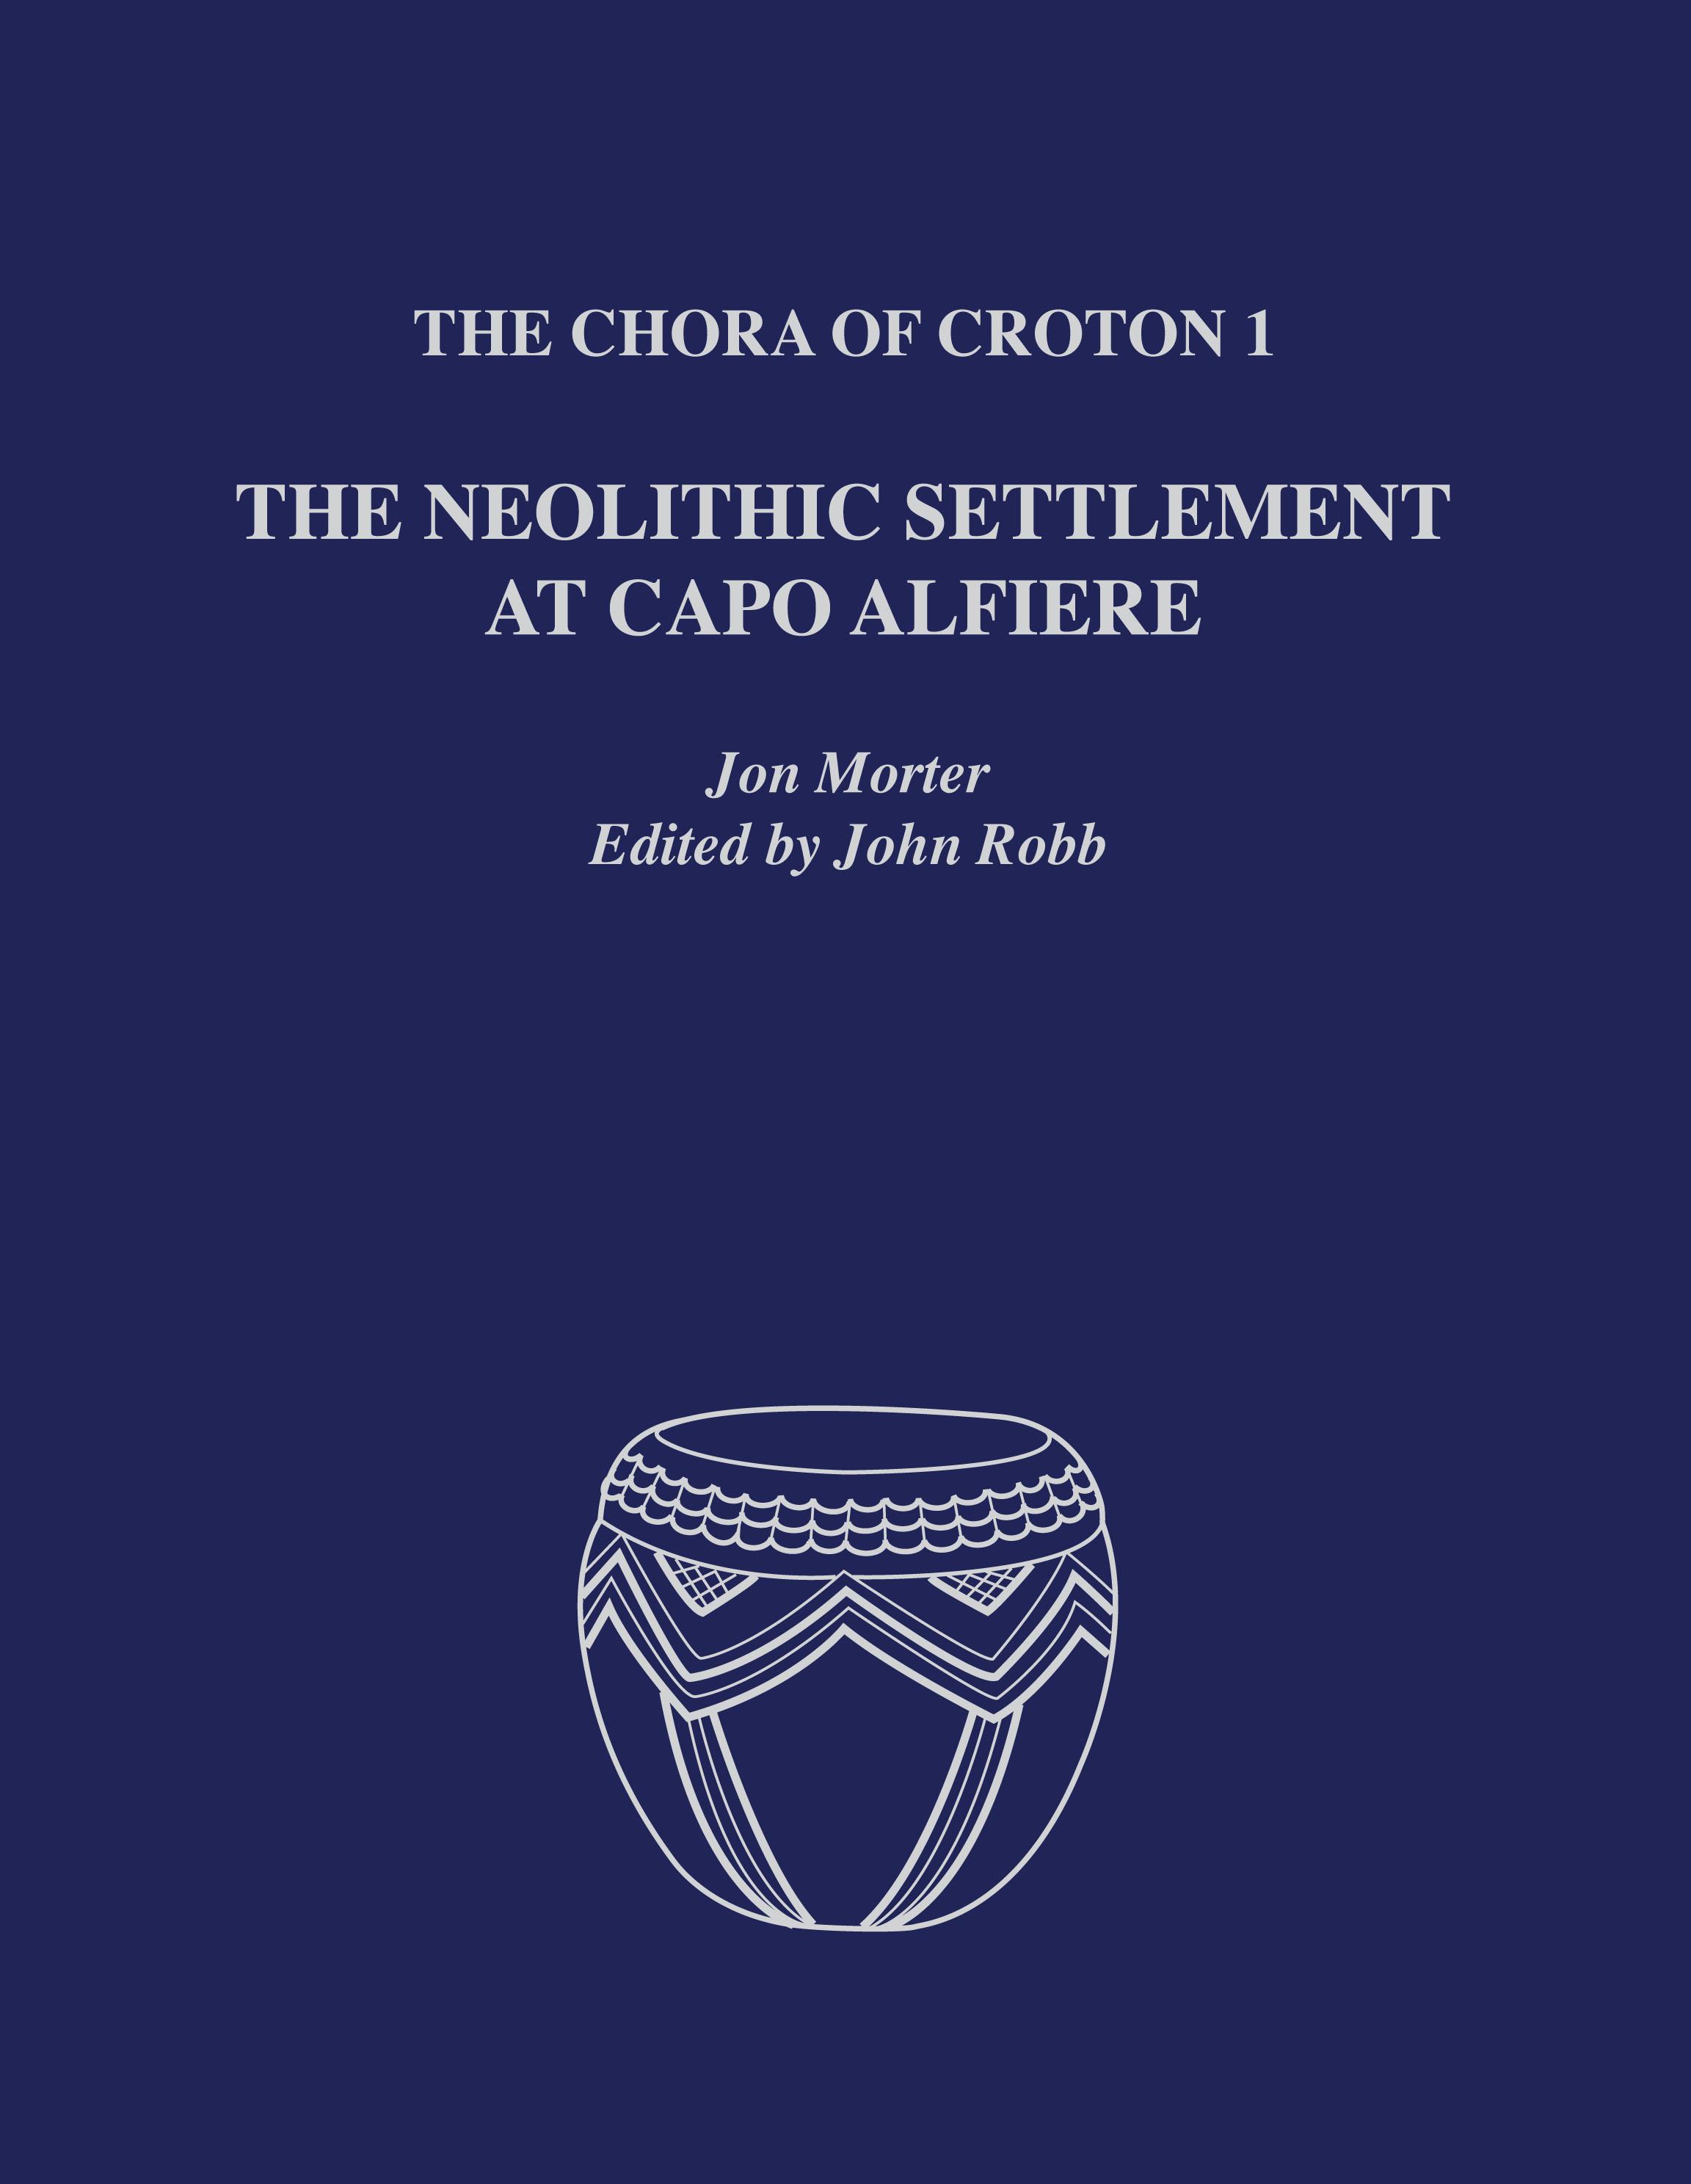 The Chora of Croton 1